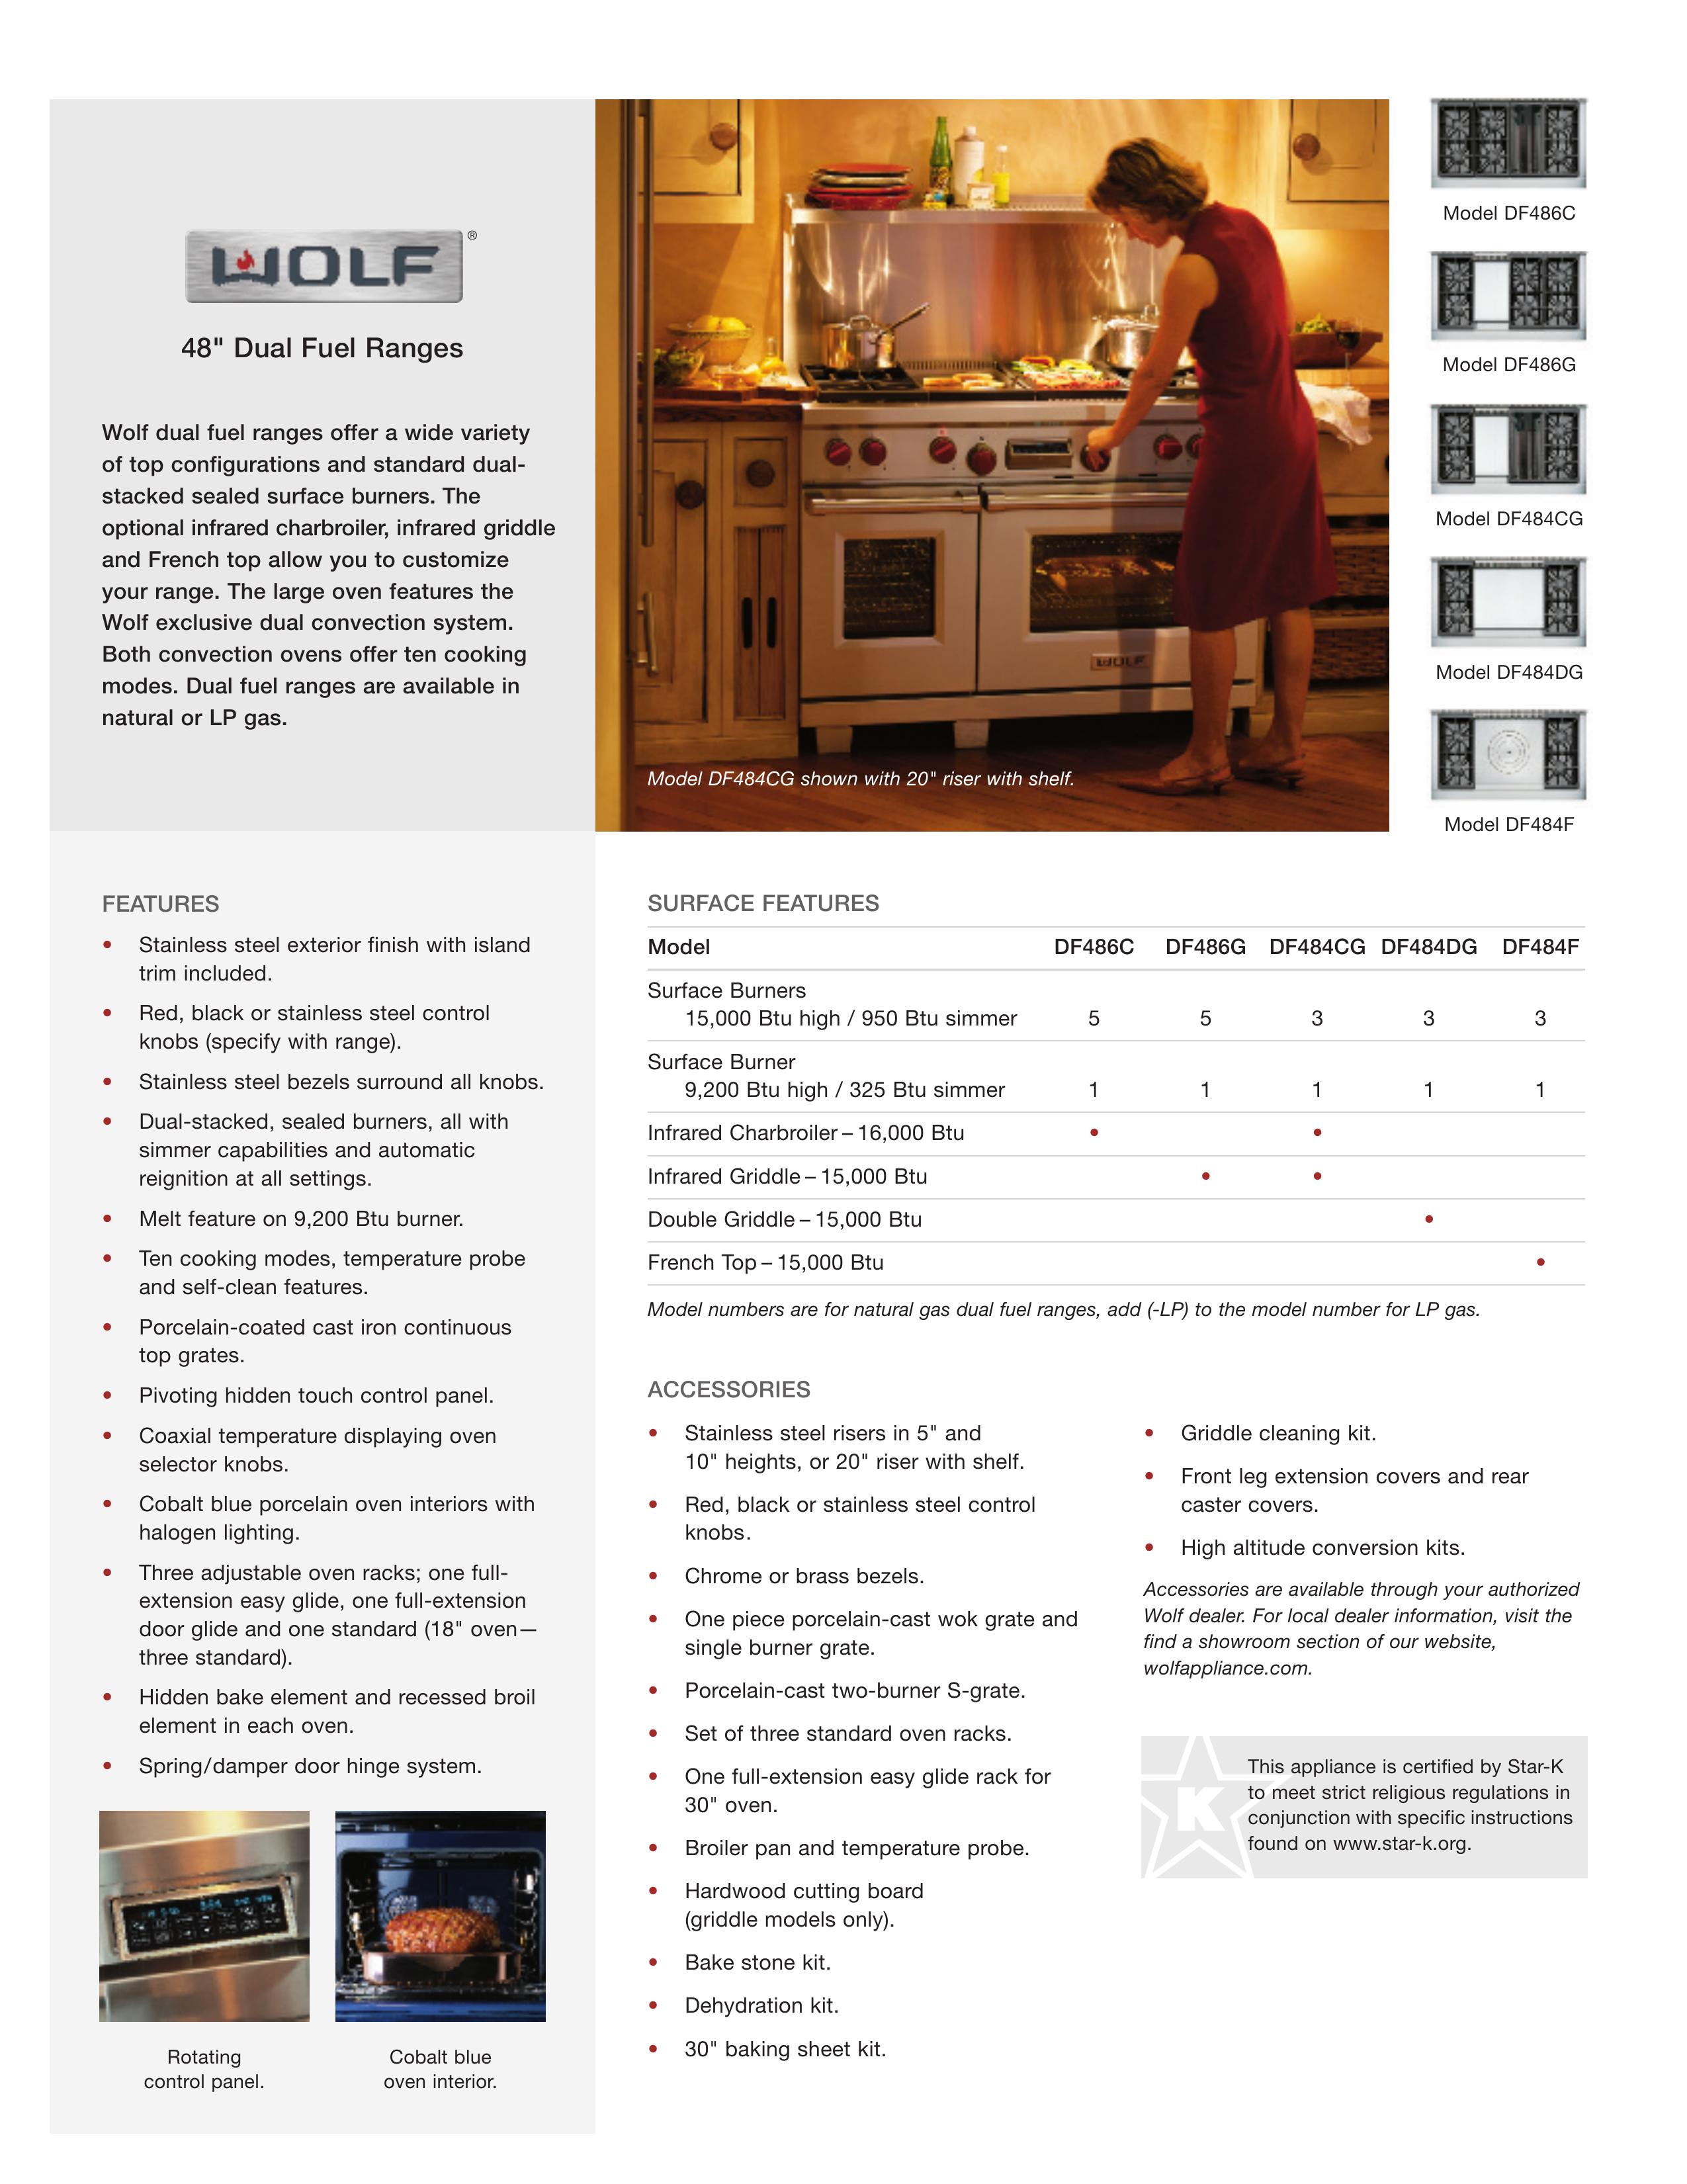 Wolf Appliance Company DF484DG Range User Manual